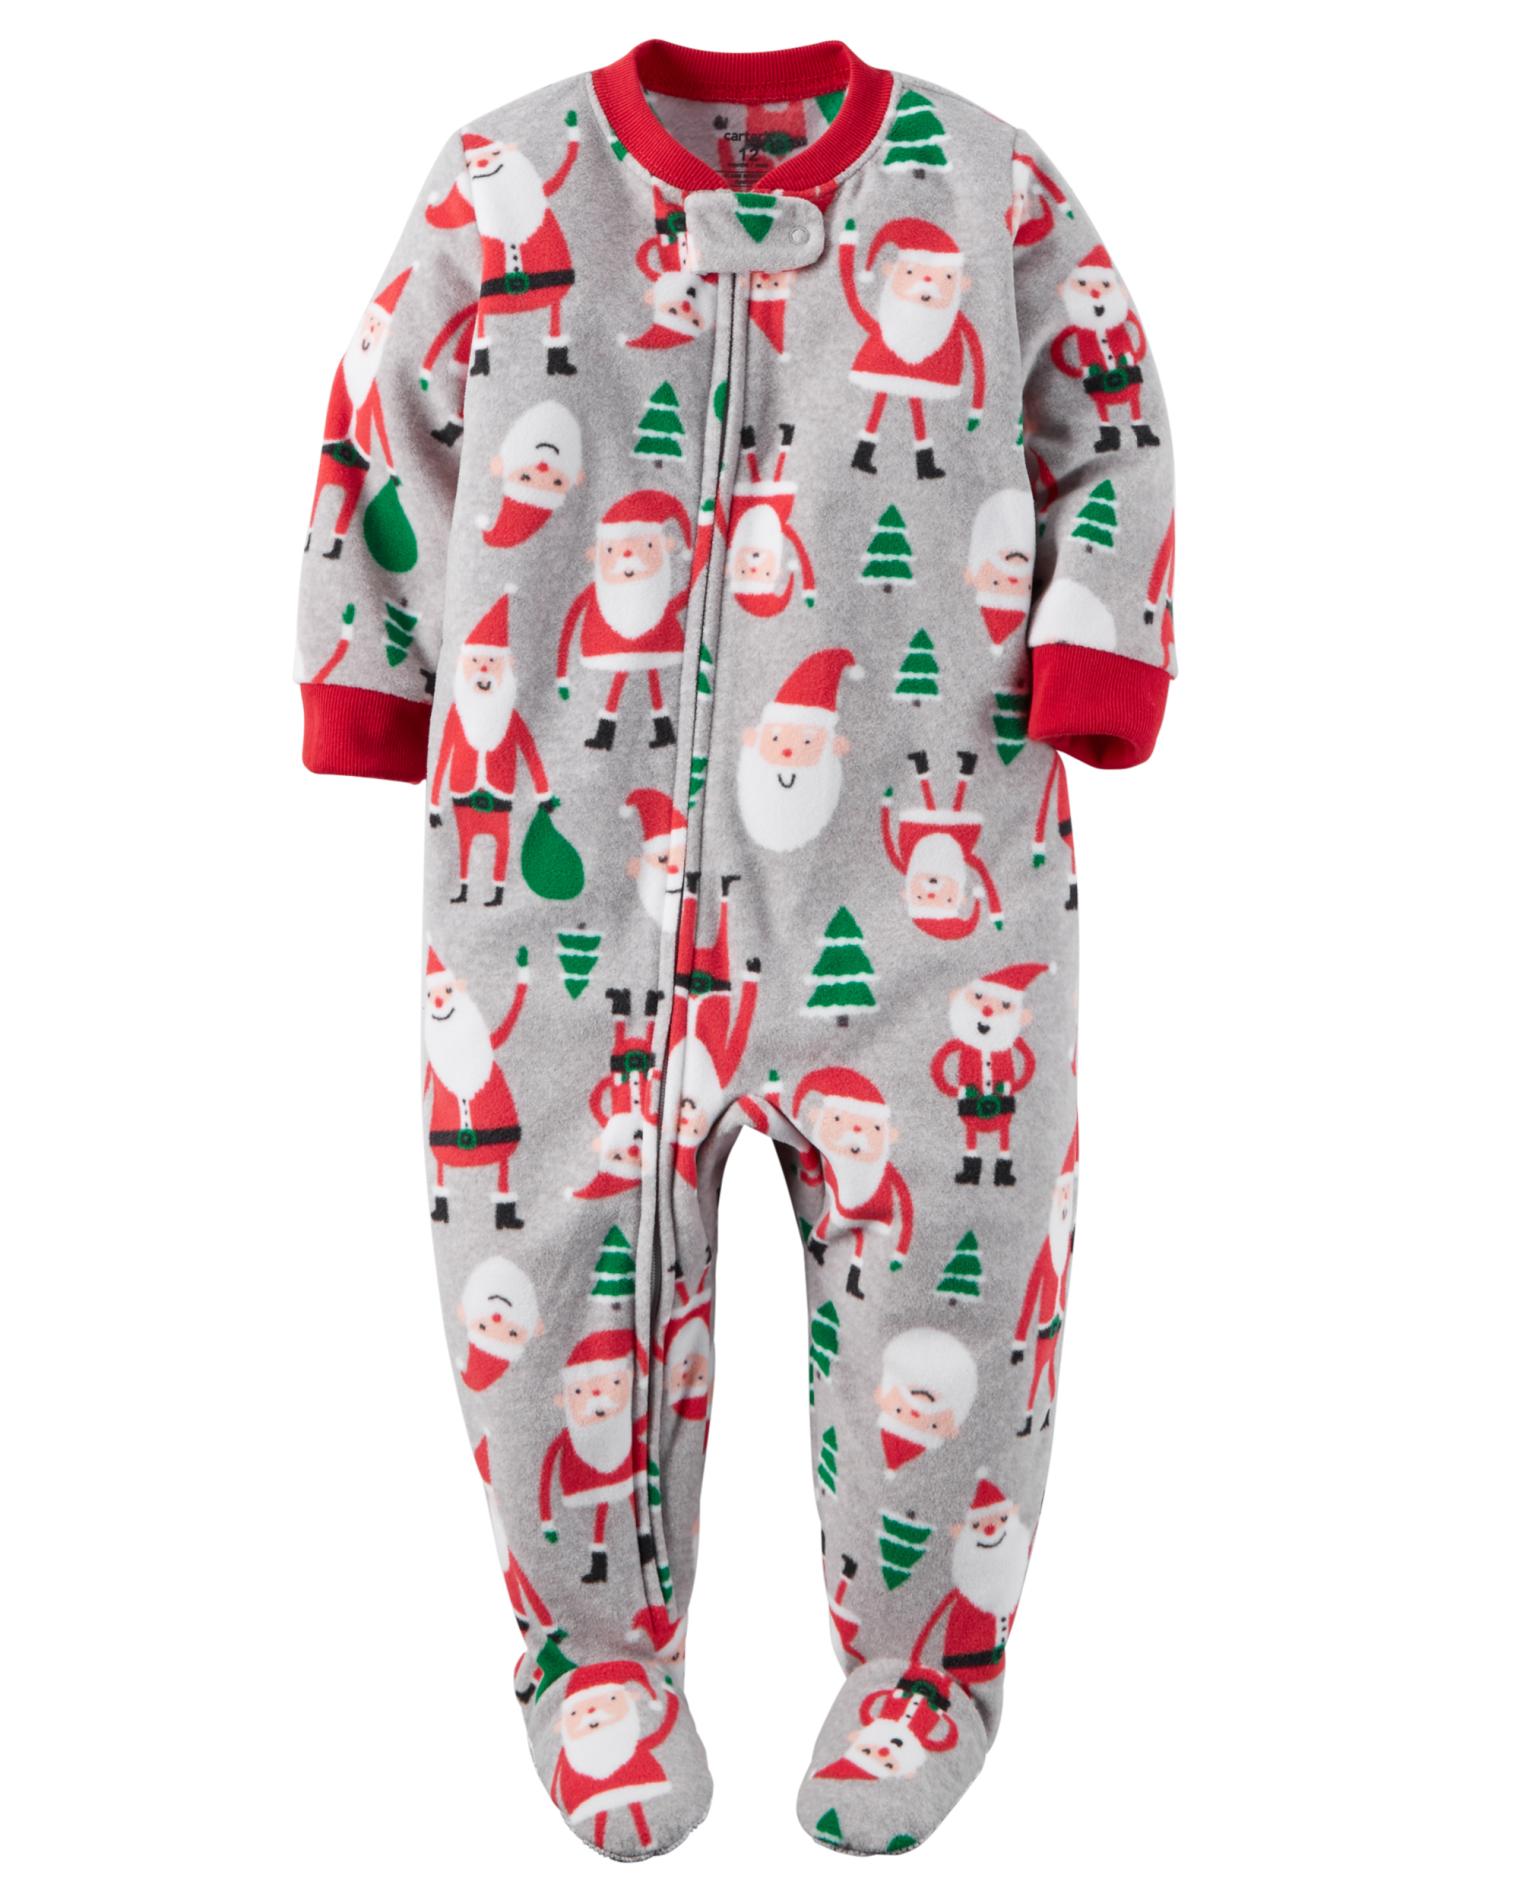 Carter's Infant & Toddler Boys' Fleece Christmas Sleeper Pajamas - Santa